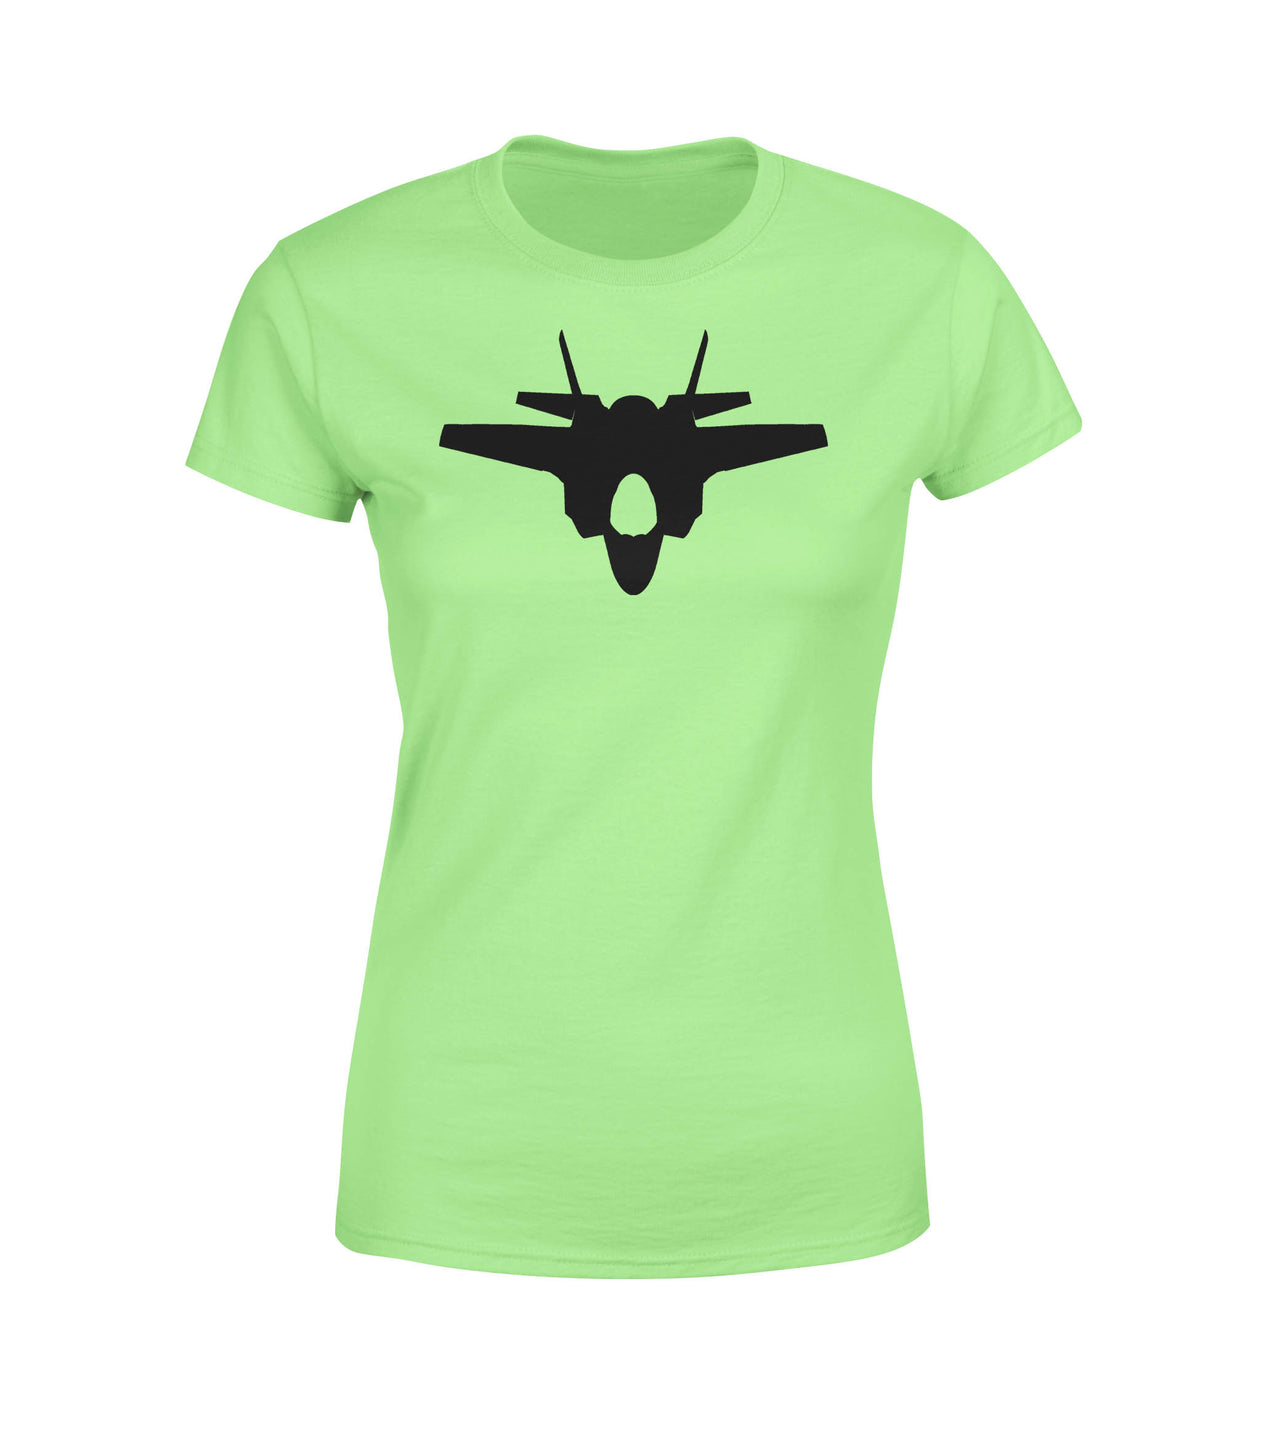 Lockheed Martin F-35 Lightning II Silhouette Designed Women T-Shirts